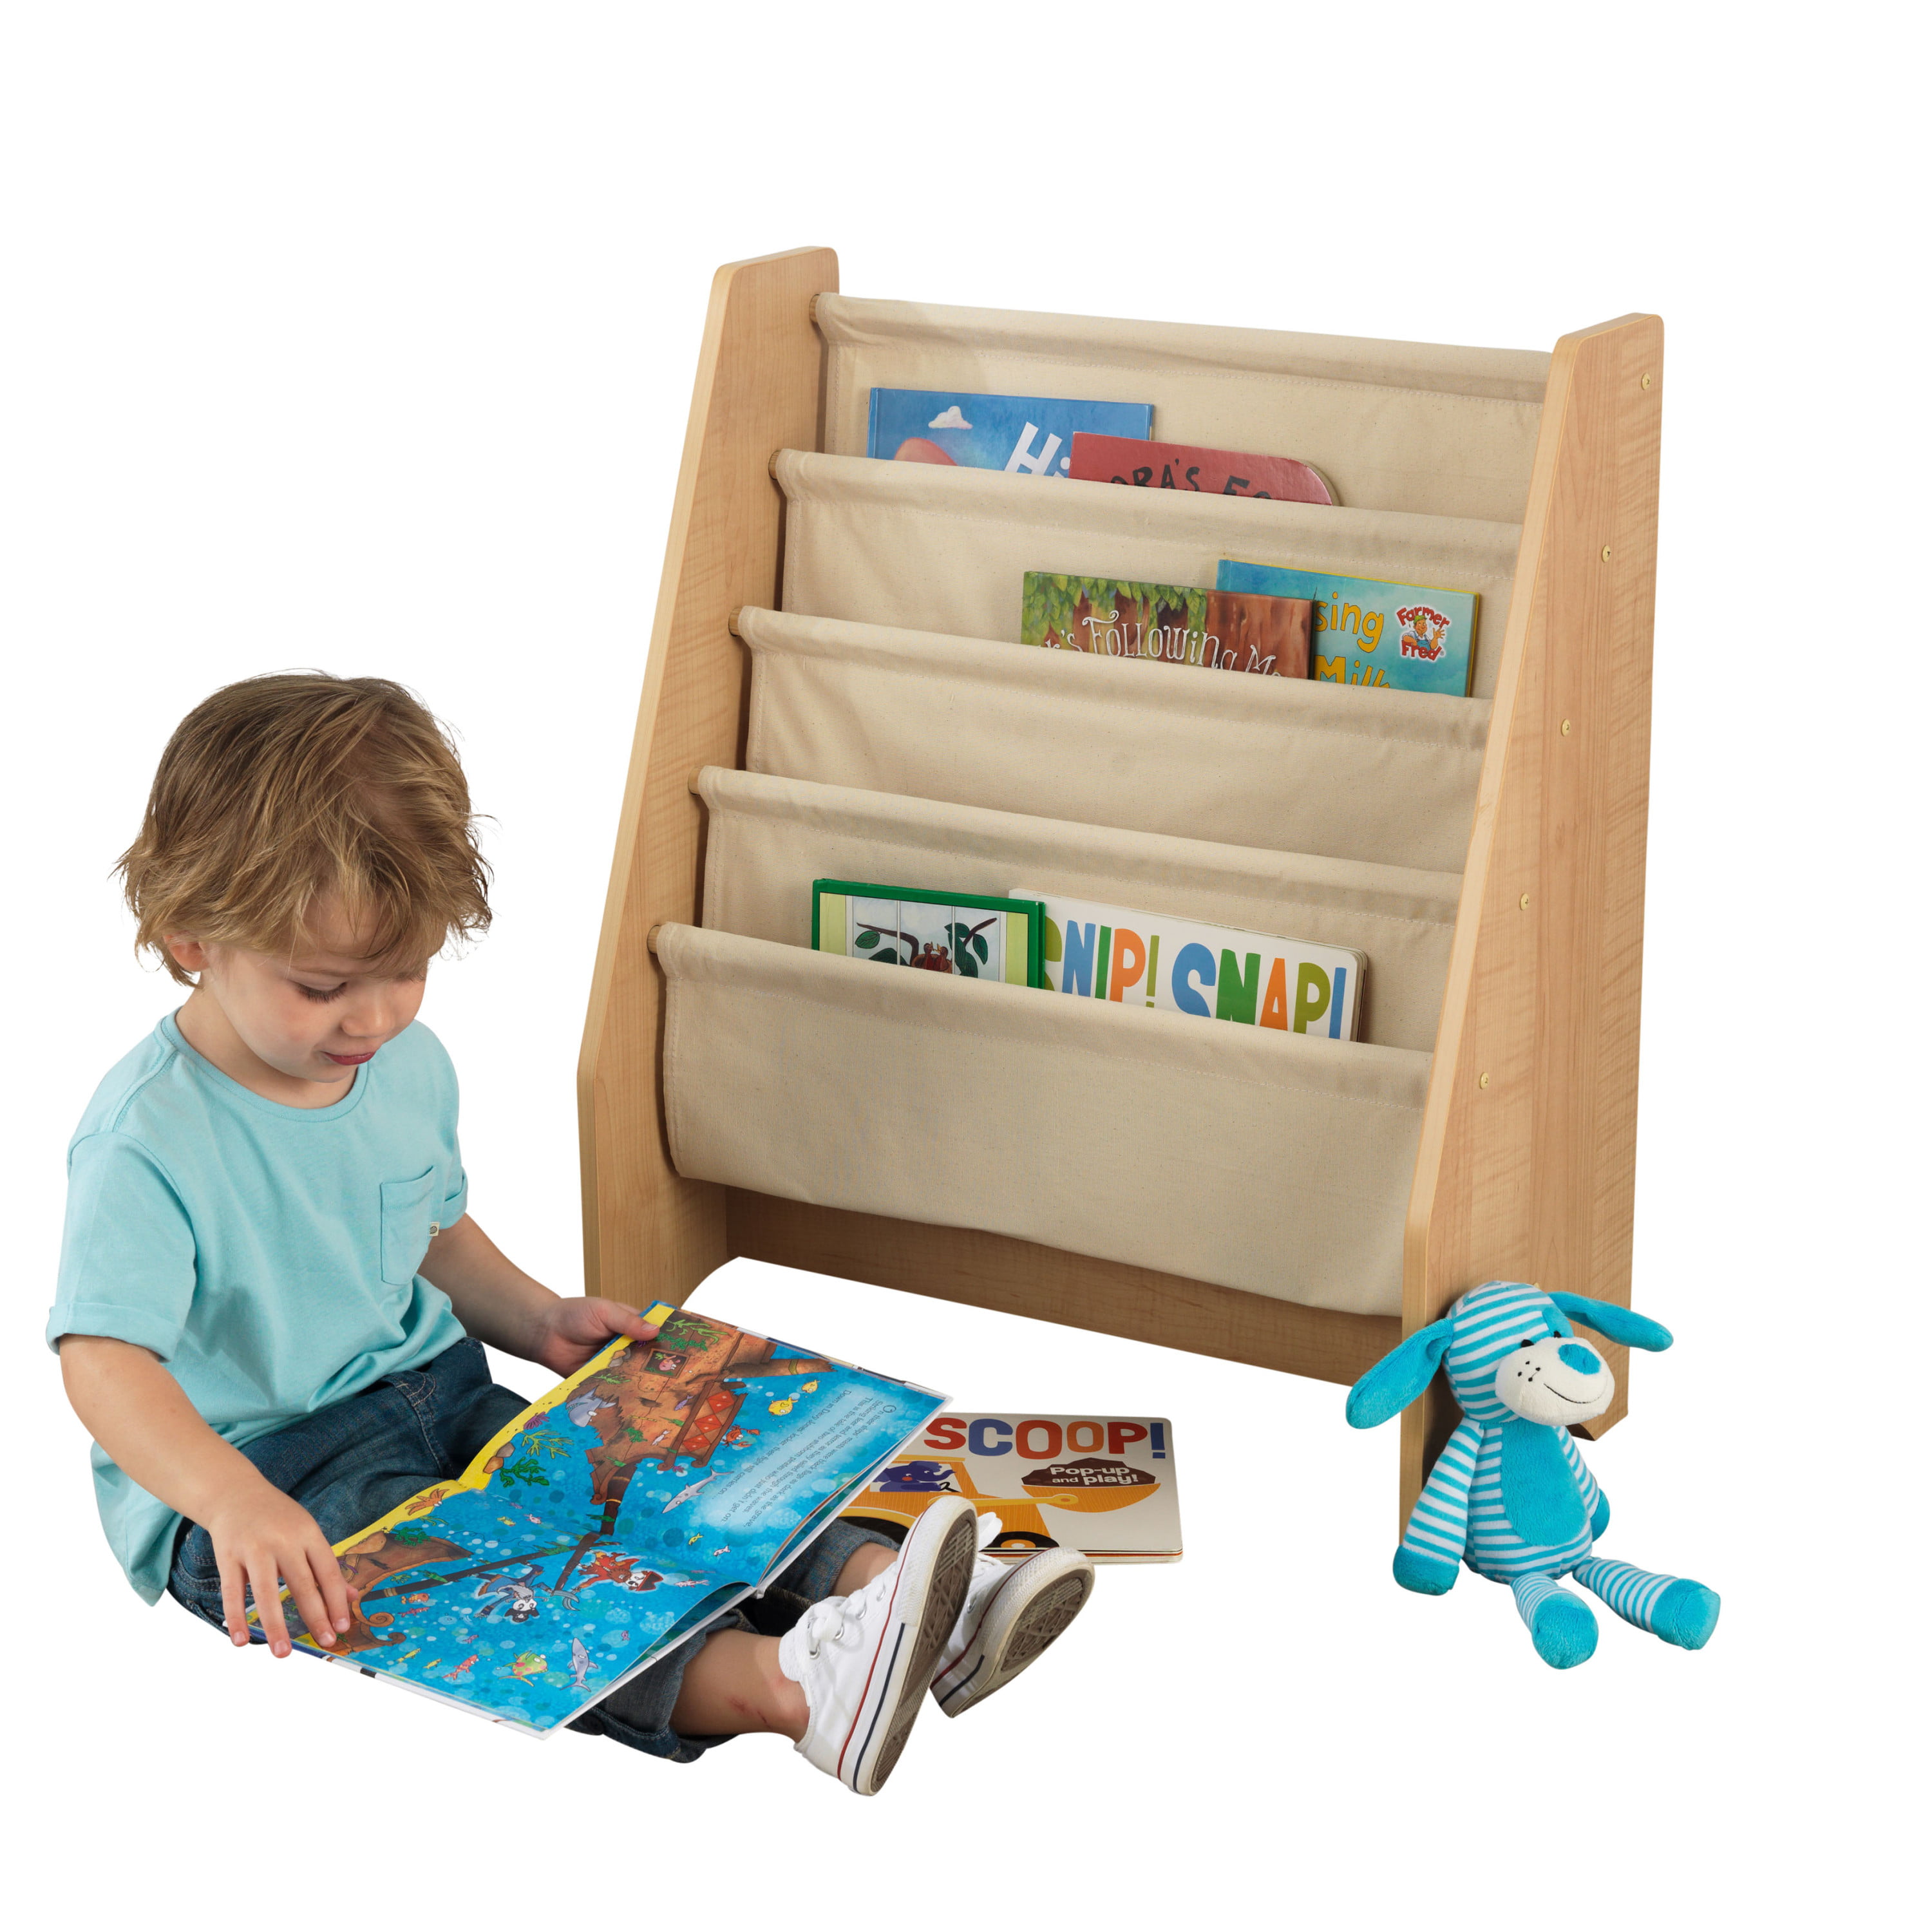 KidKraft Wood and Canvas Sling Bookshelf Furniture for Kids – Natural